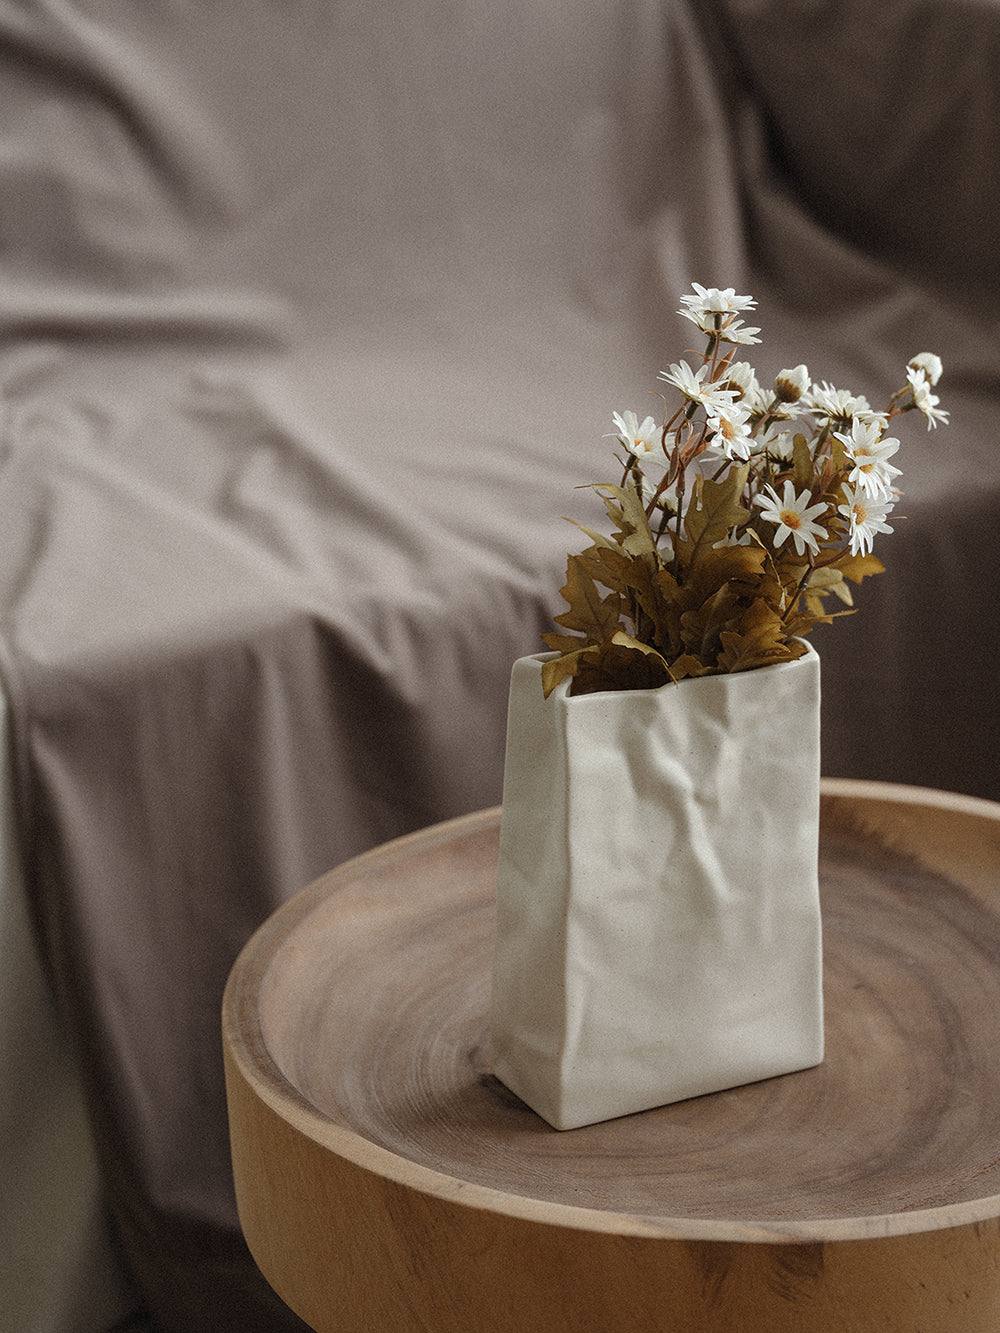 Crink Paper Bag Vase - WENSHUO